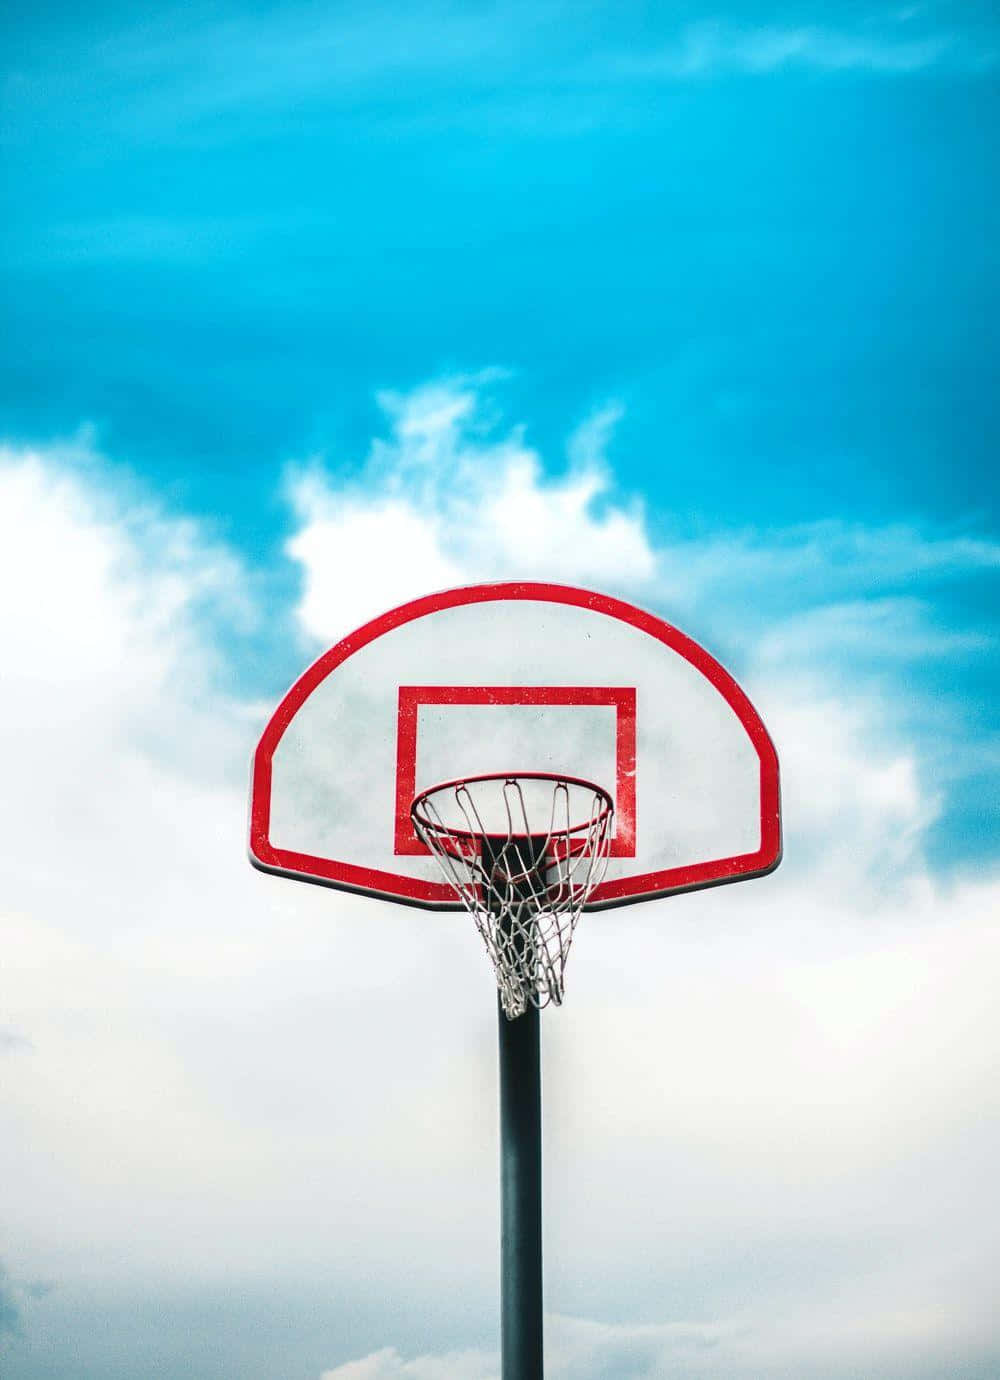 Outdoor Basketball Hoop Against Blue Sky